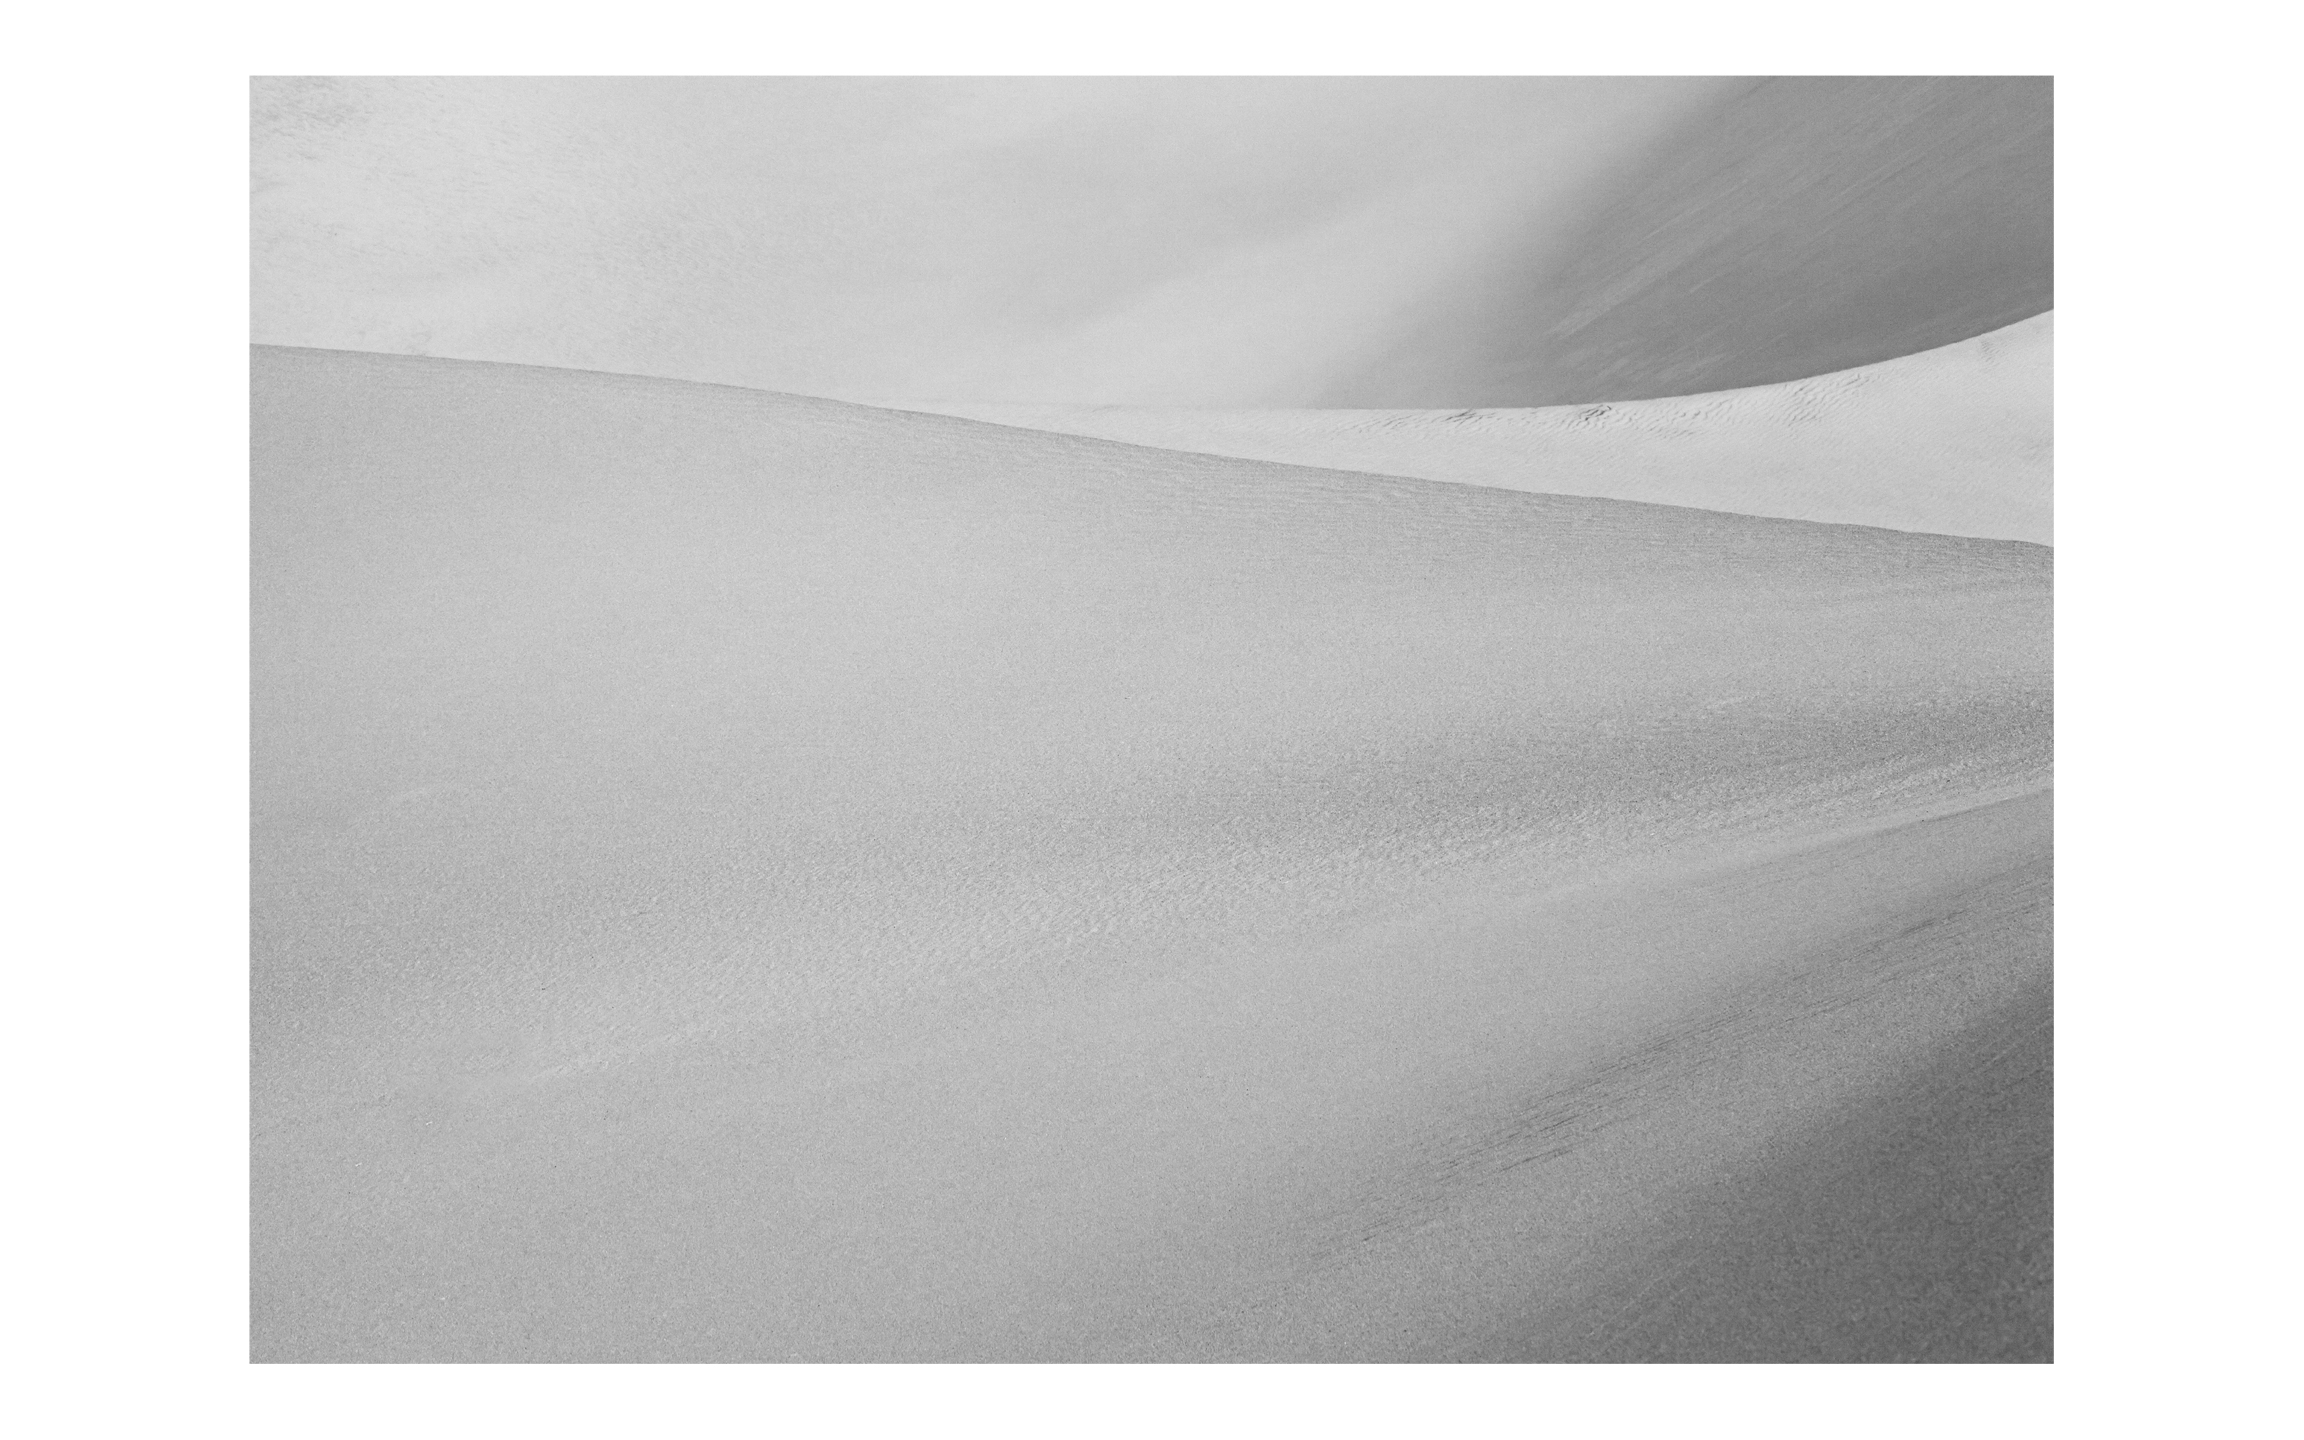 Panamint Dunes_spread 05.jpg